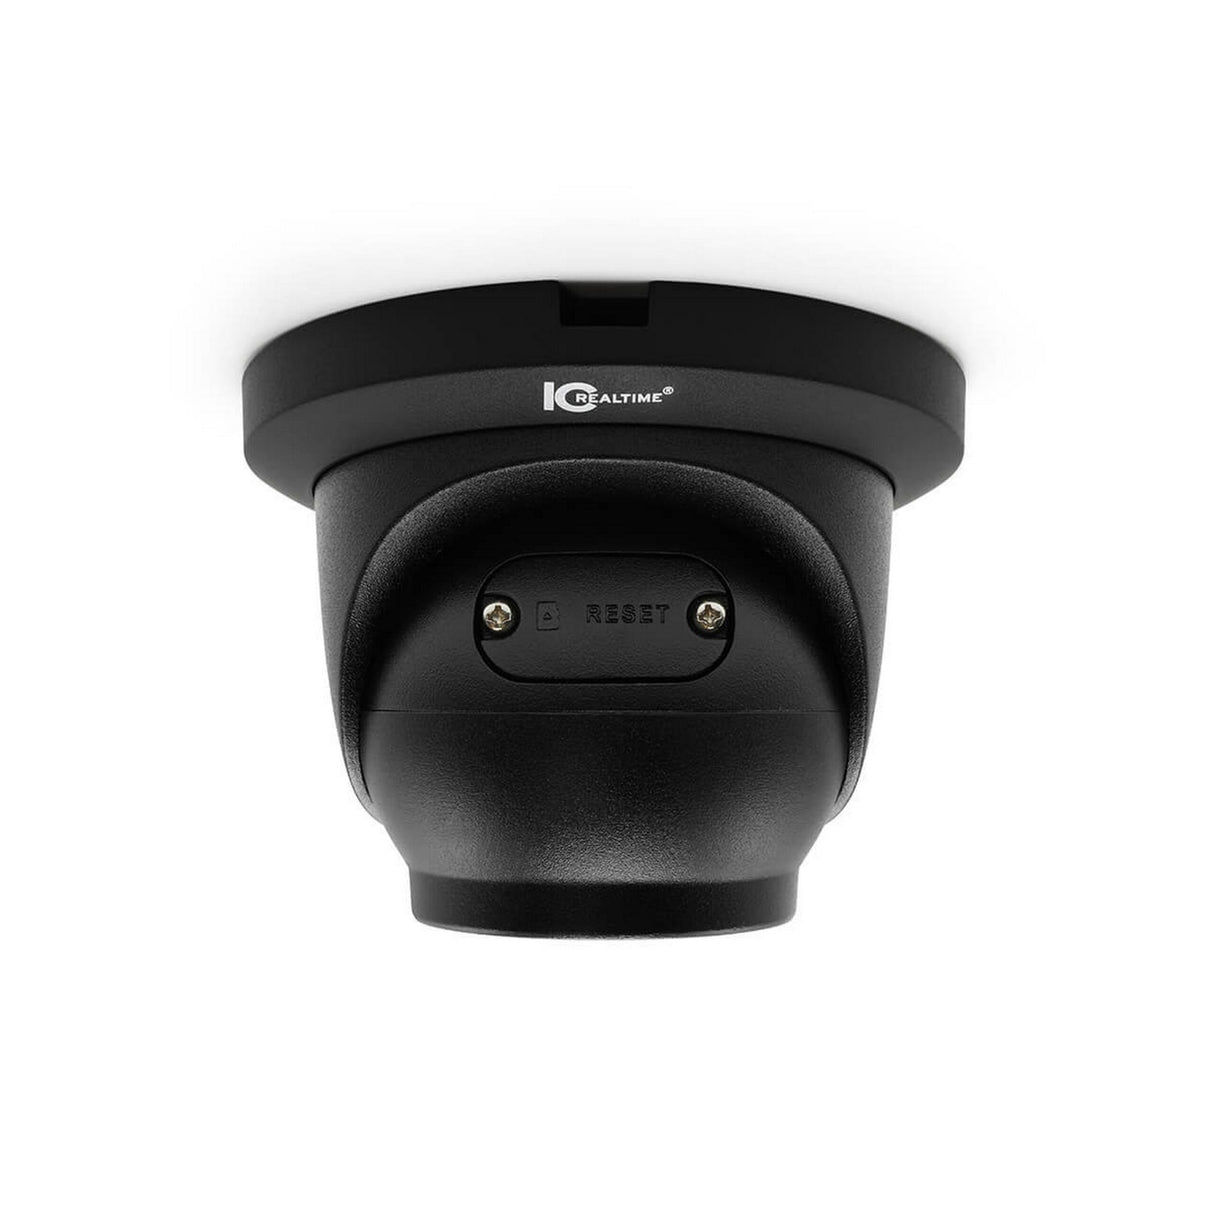 IC Realtime IPMX-E20F-IRB2 2MP IP Indoor/Outdoor Small Size Starlight Eyeball Dome Camera, Black